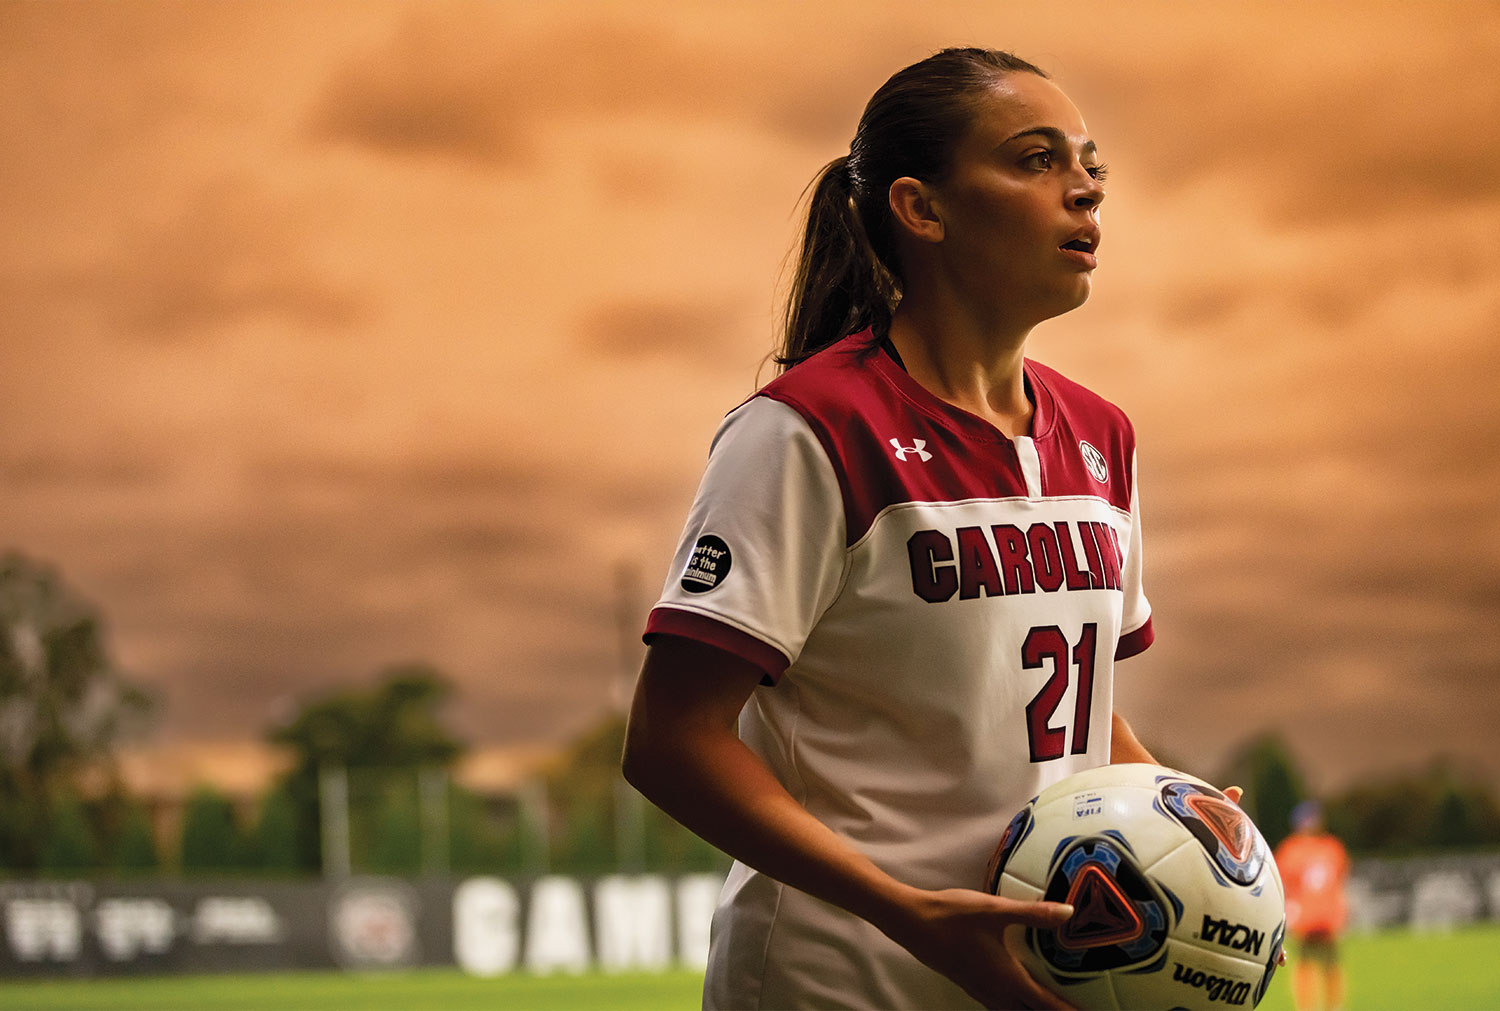 Gamecock女子足球运动员在比赛中抱着球的照片，夕阳在她身后。